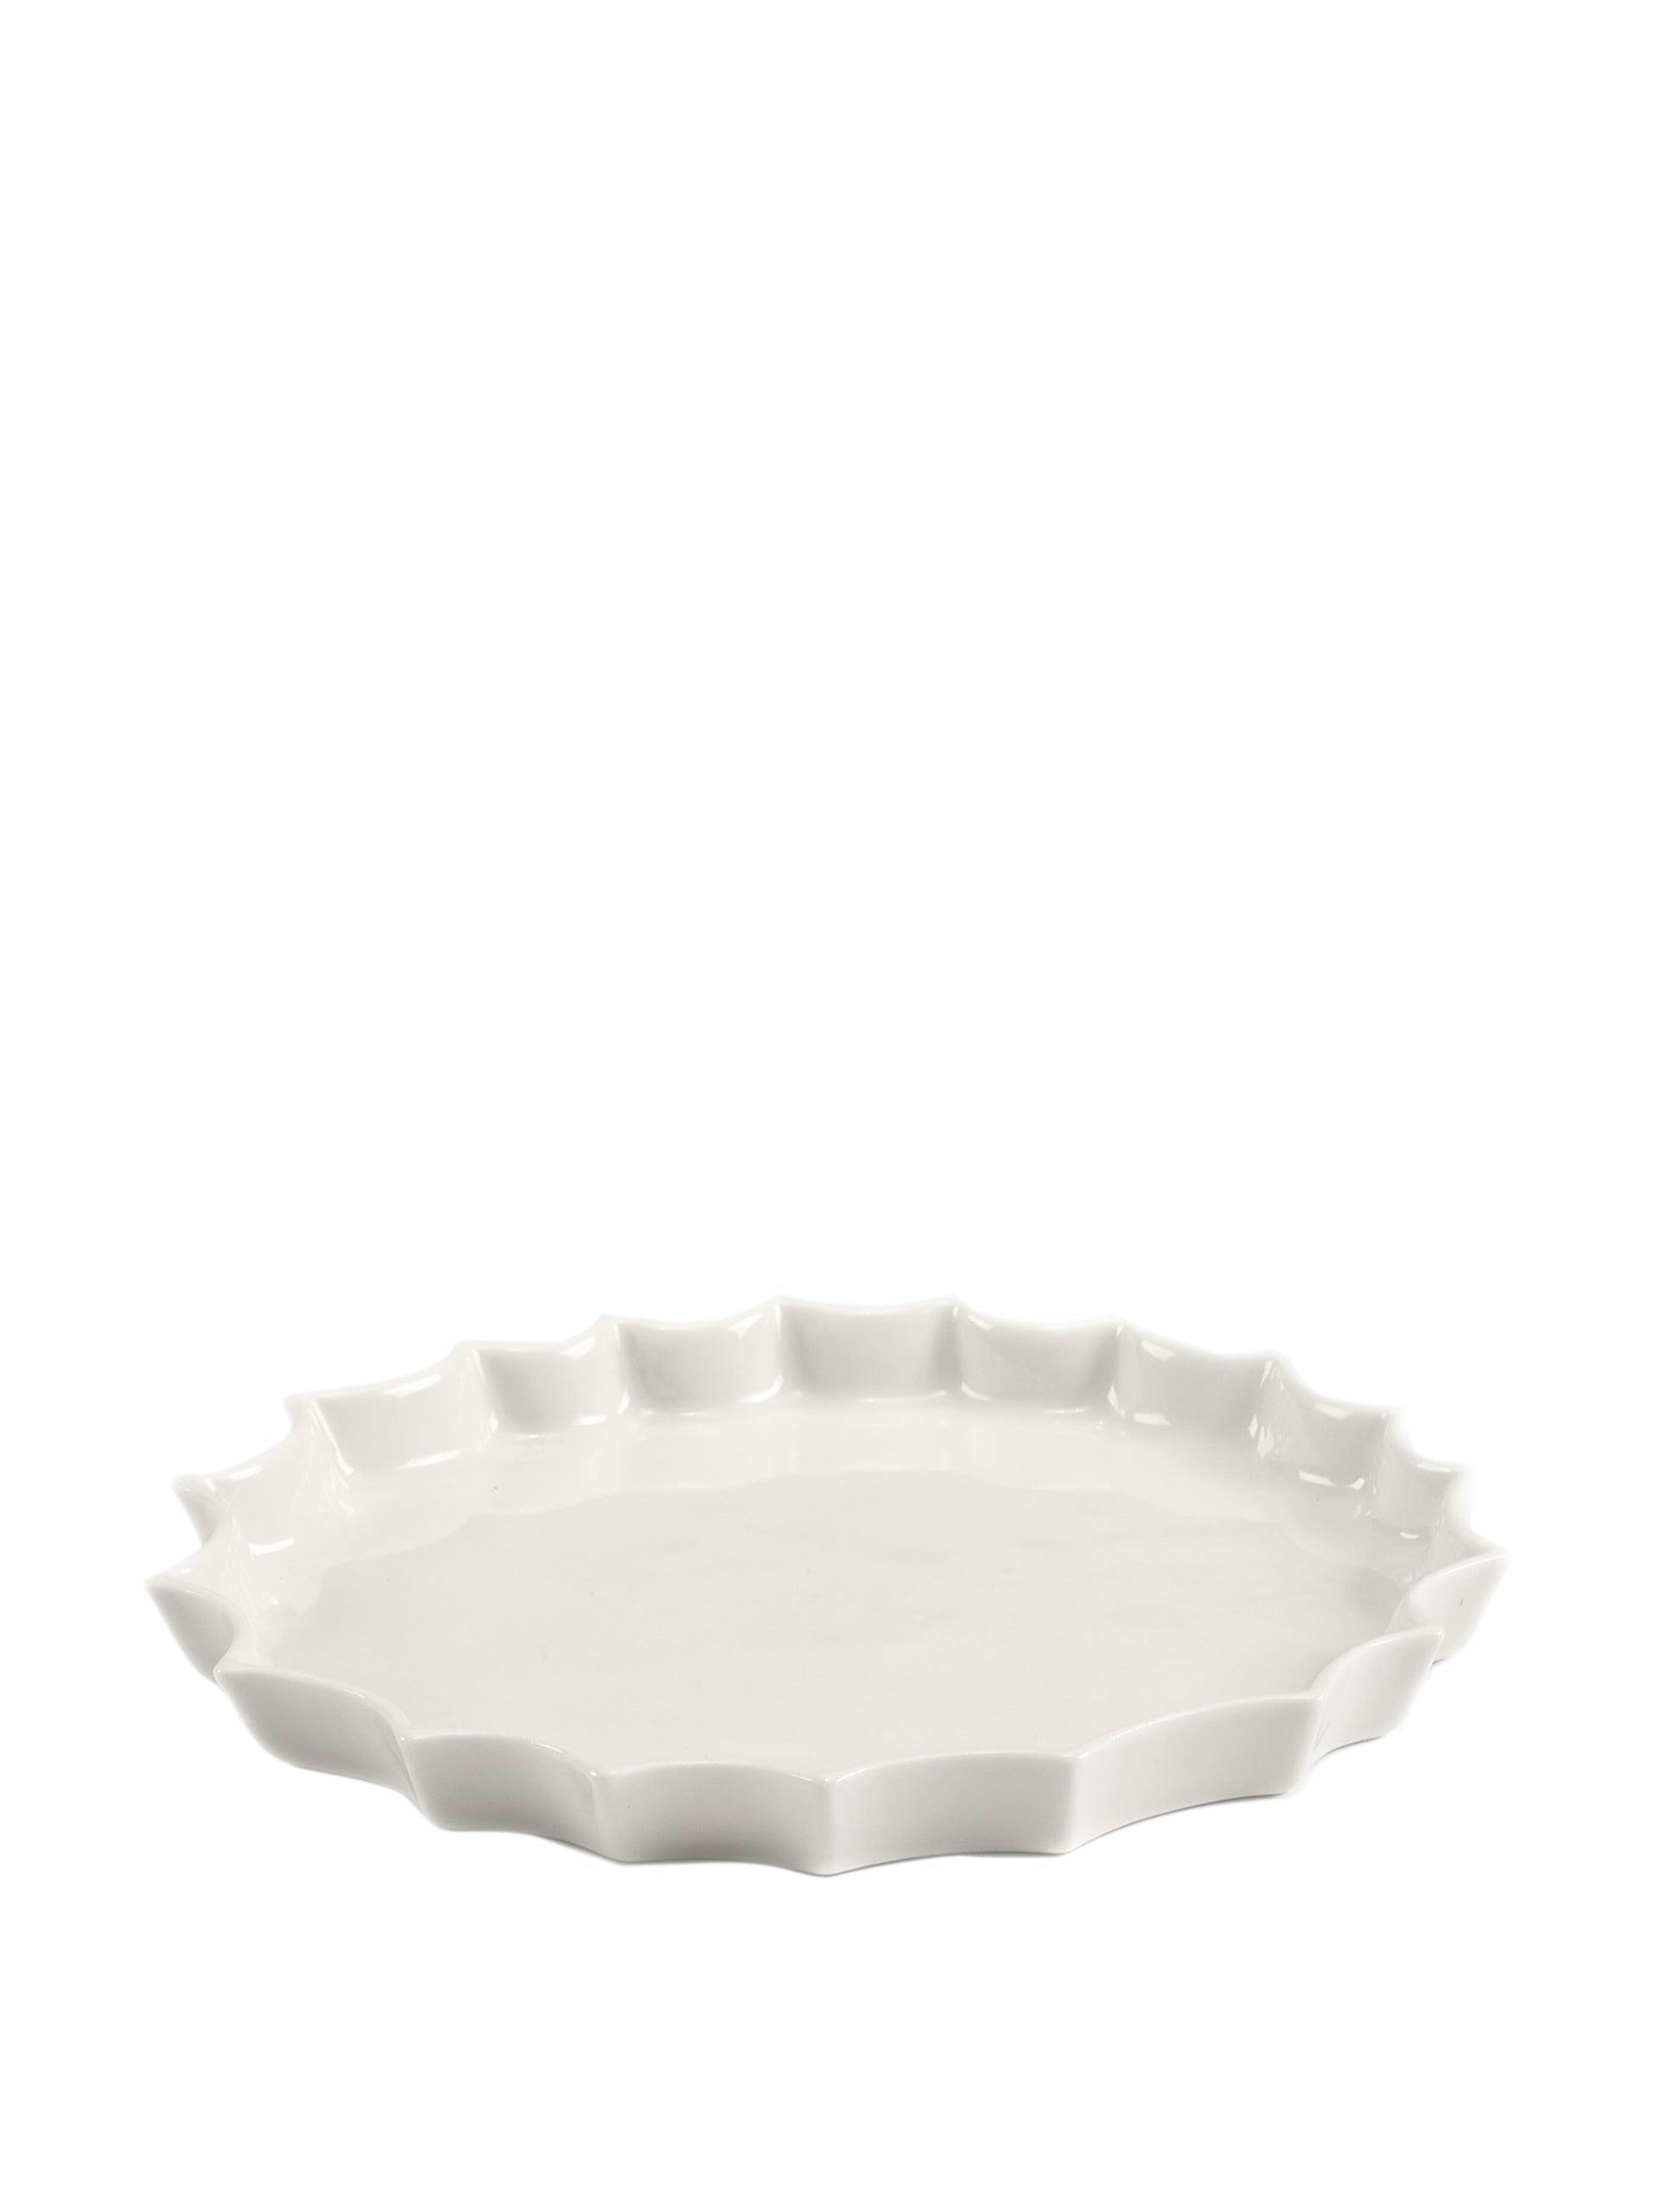 White porcelain Canele plate